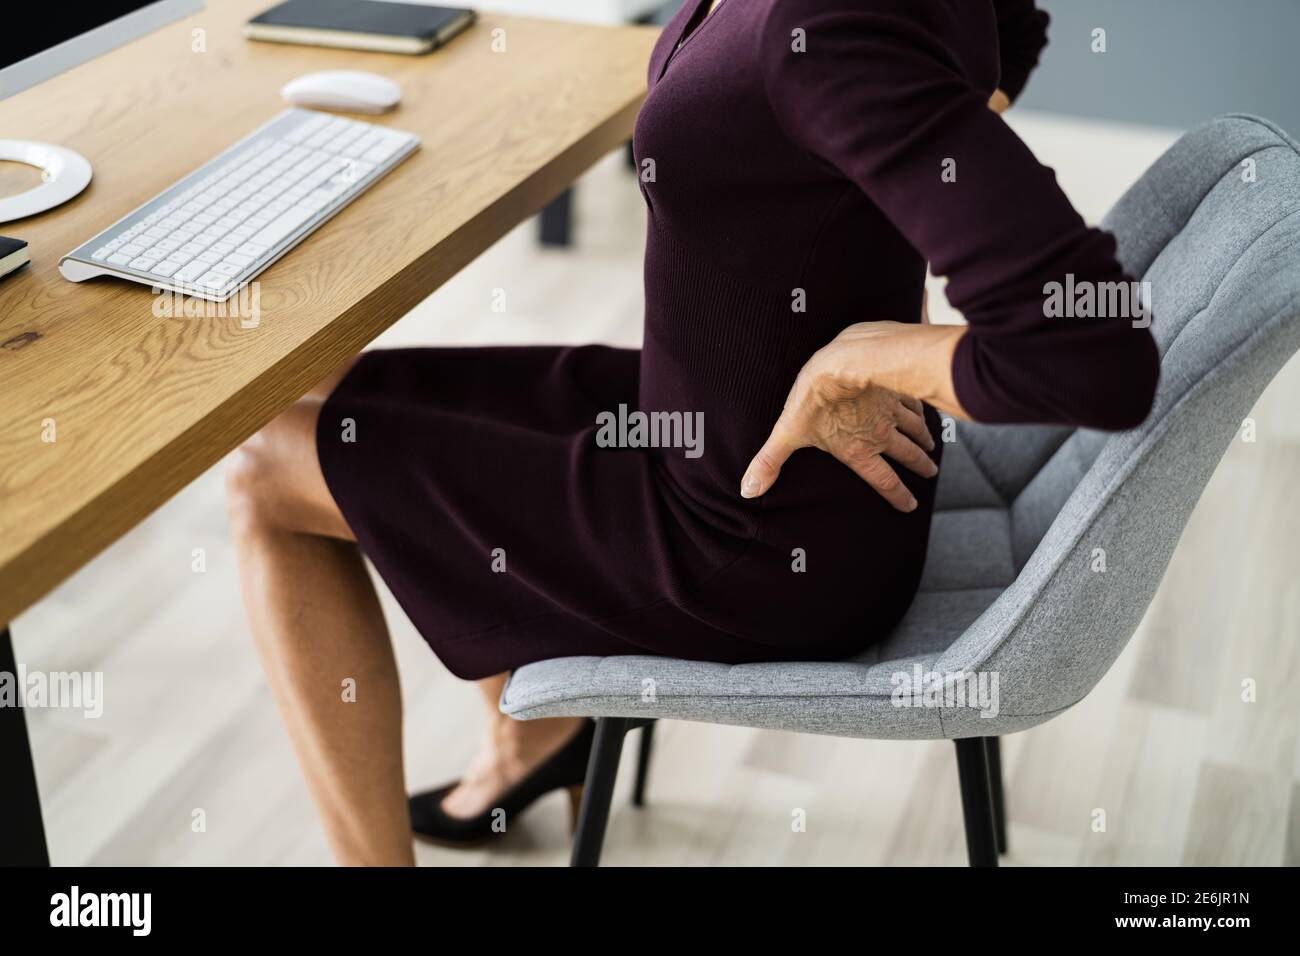 Back Pain At Work. Bad Computer Posture Stock Photo